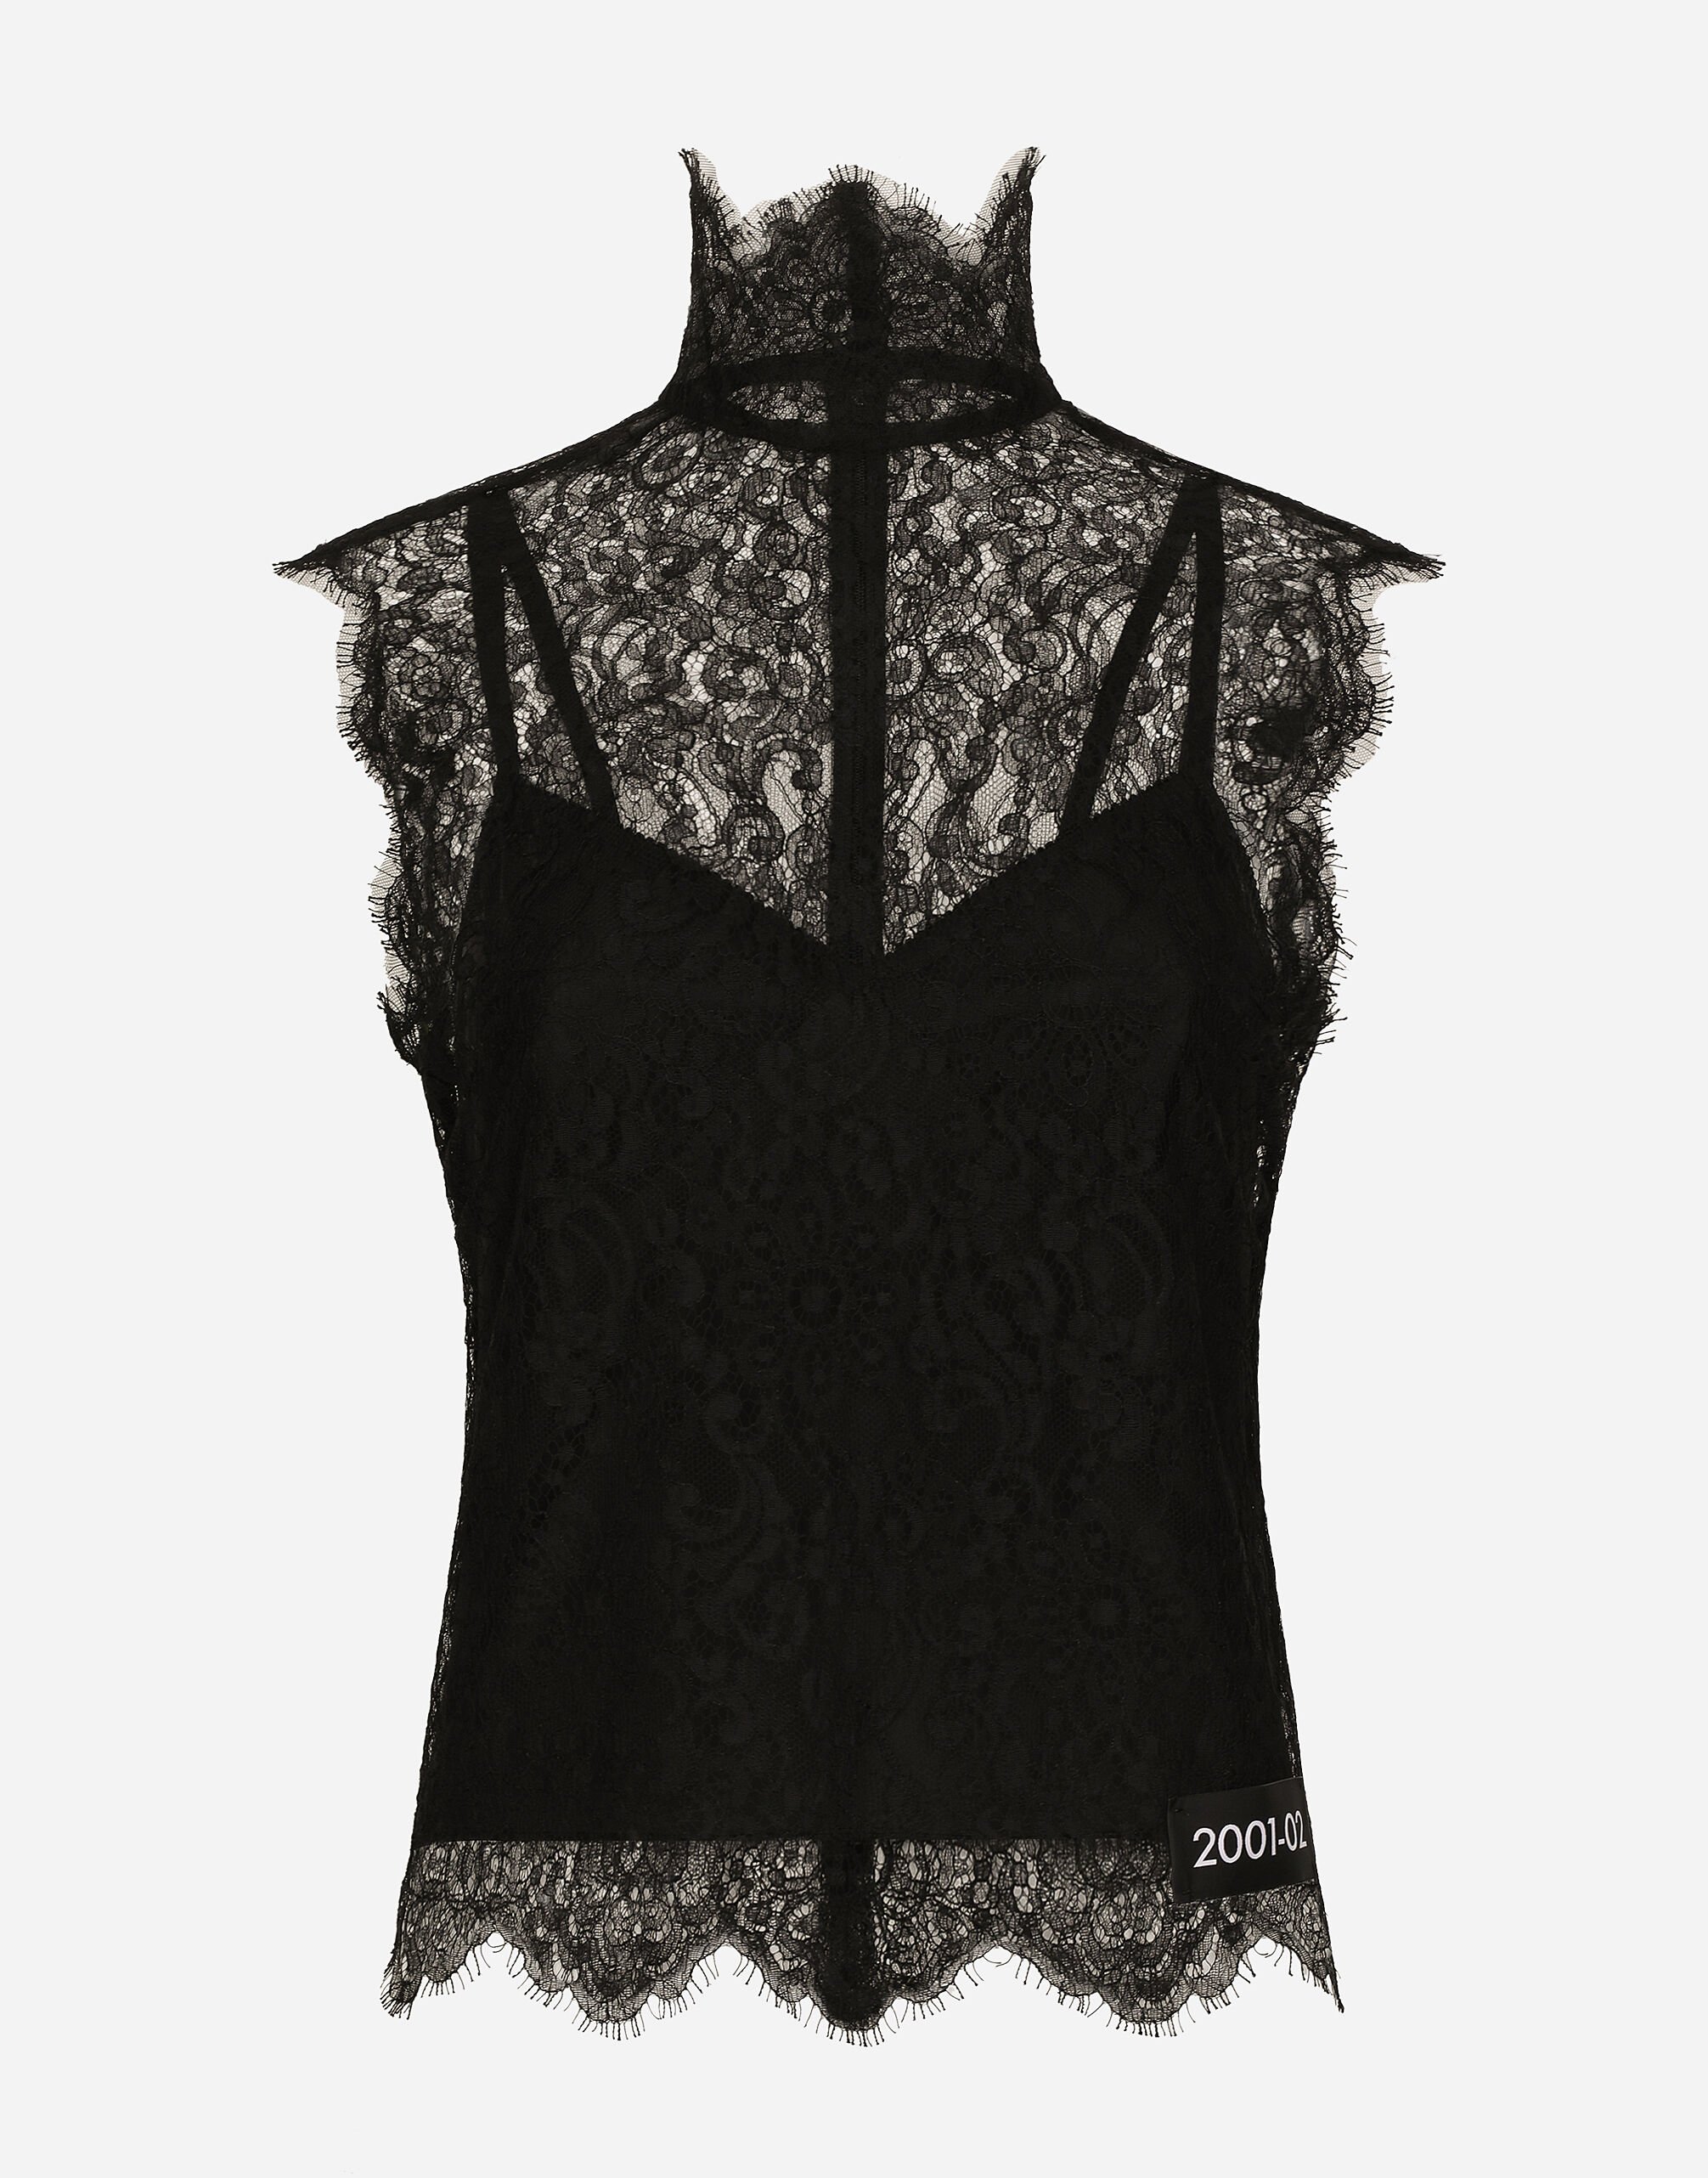 Dolce & Gabbana Топ без рукавов, из кружева шантильи черный VG443FVP187